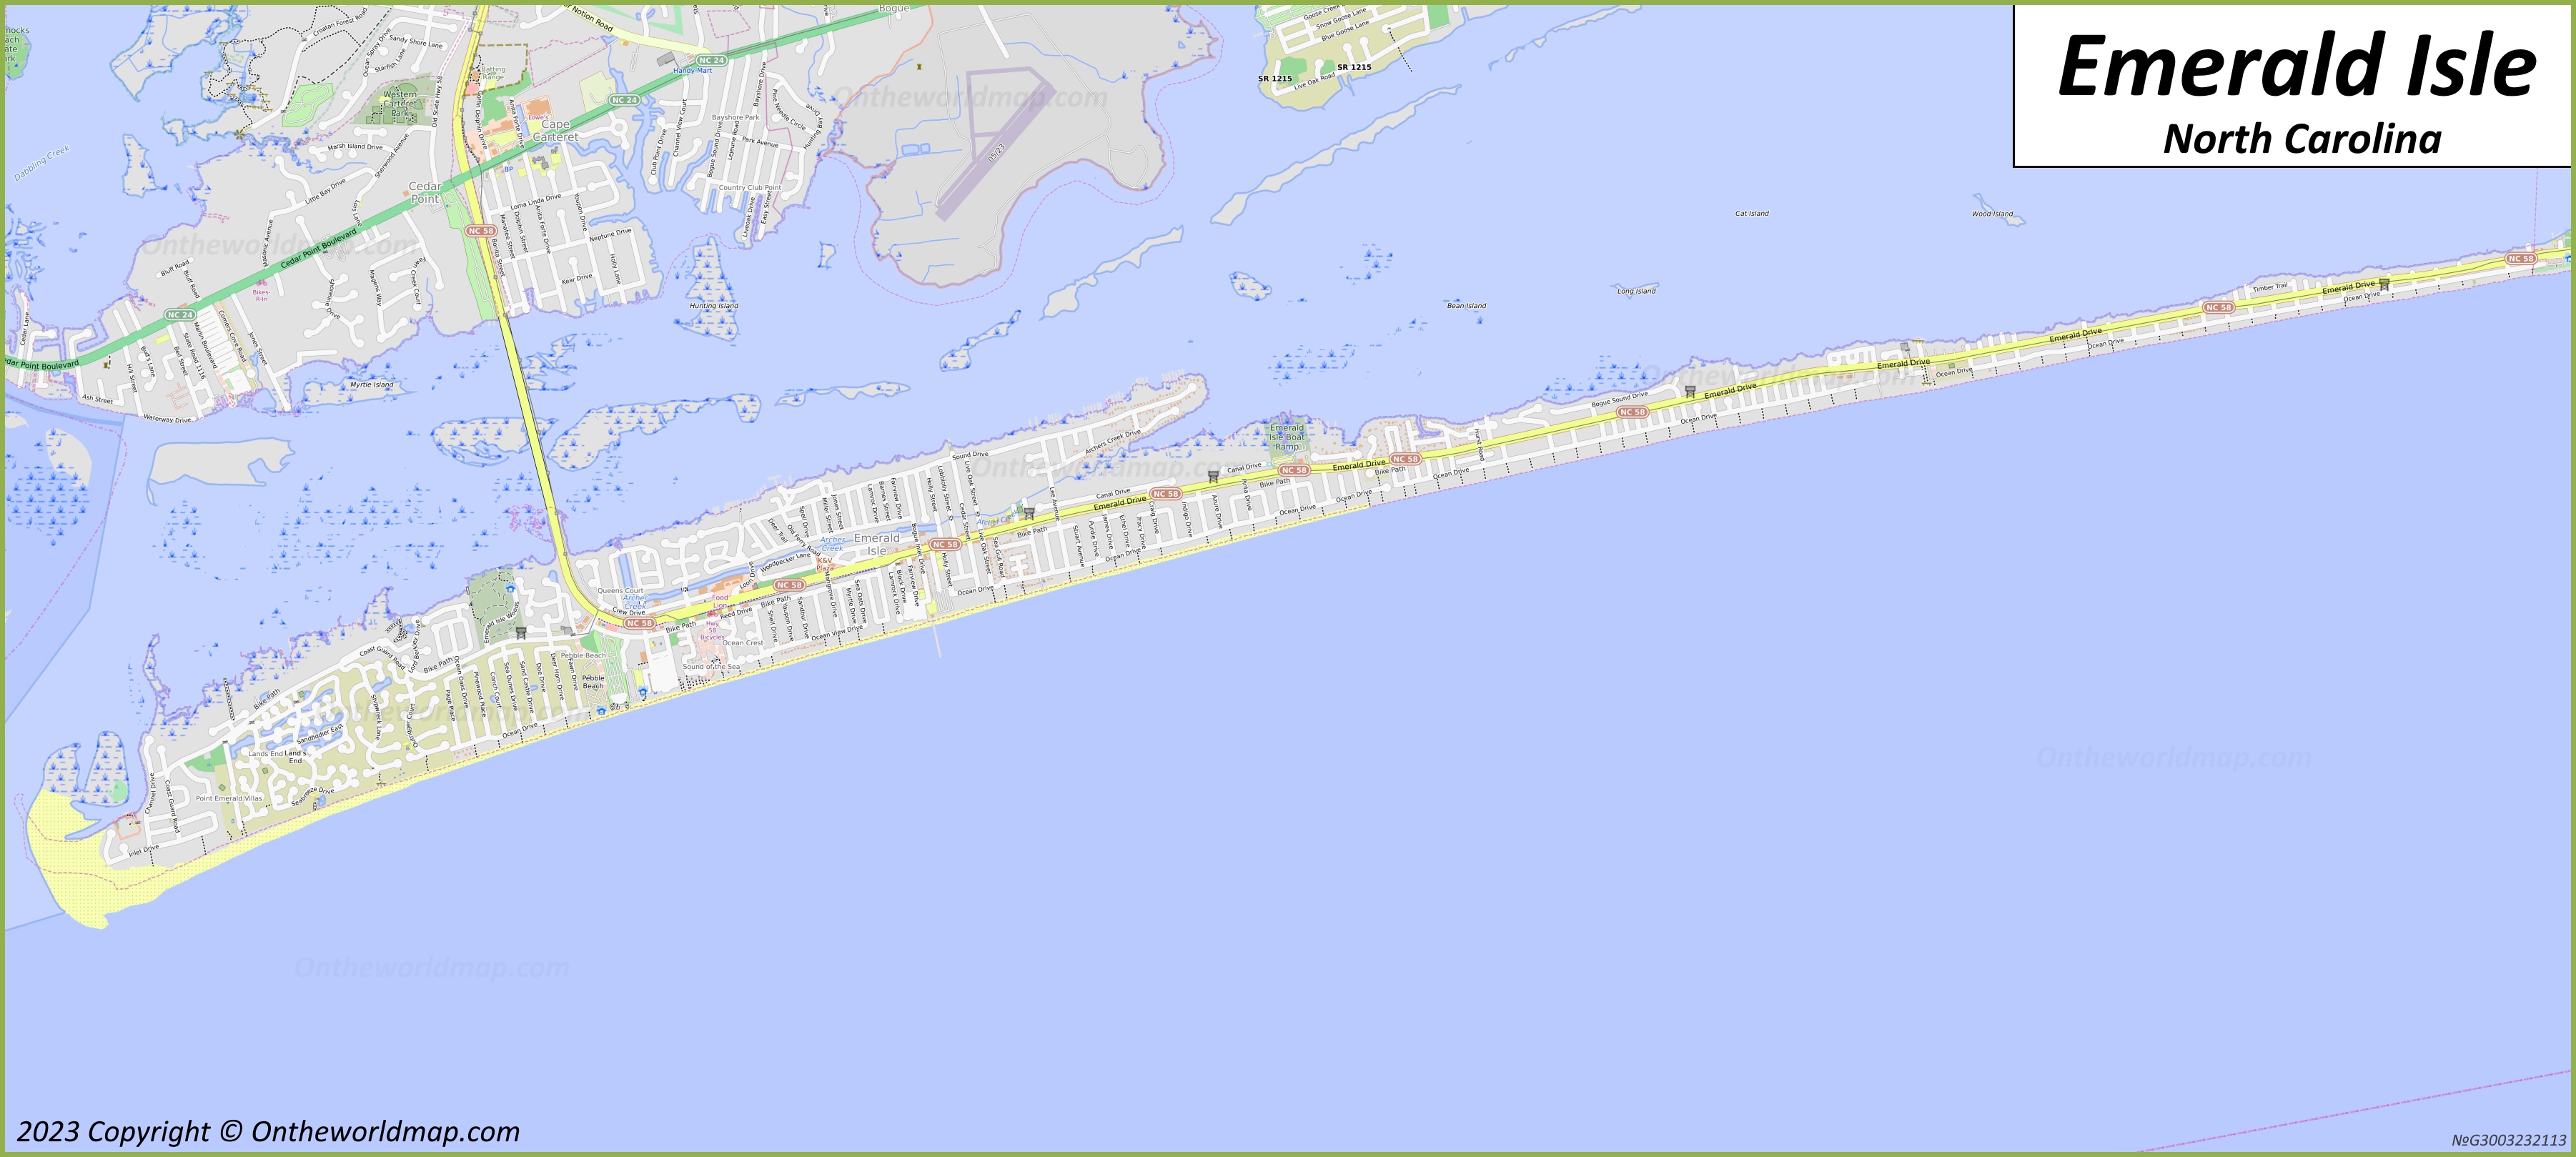 Isle emerald map nc maps emeraldislerealty area transportation north directions where located outer banks carolina island